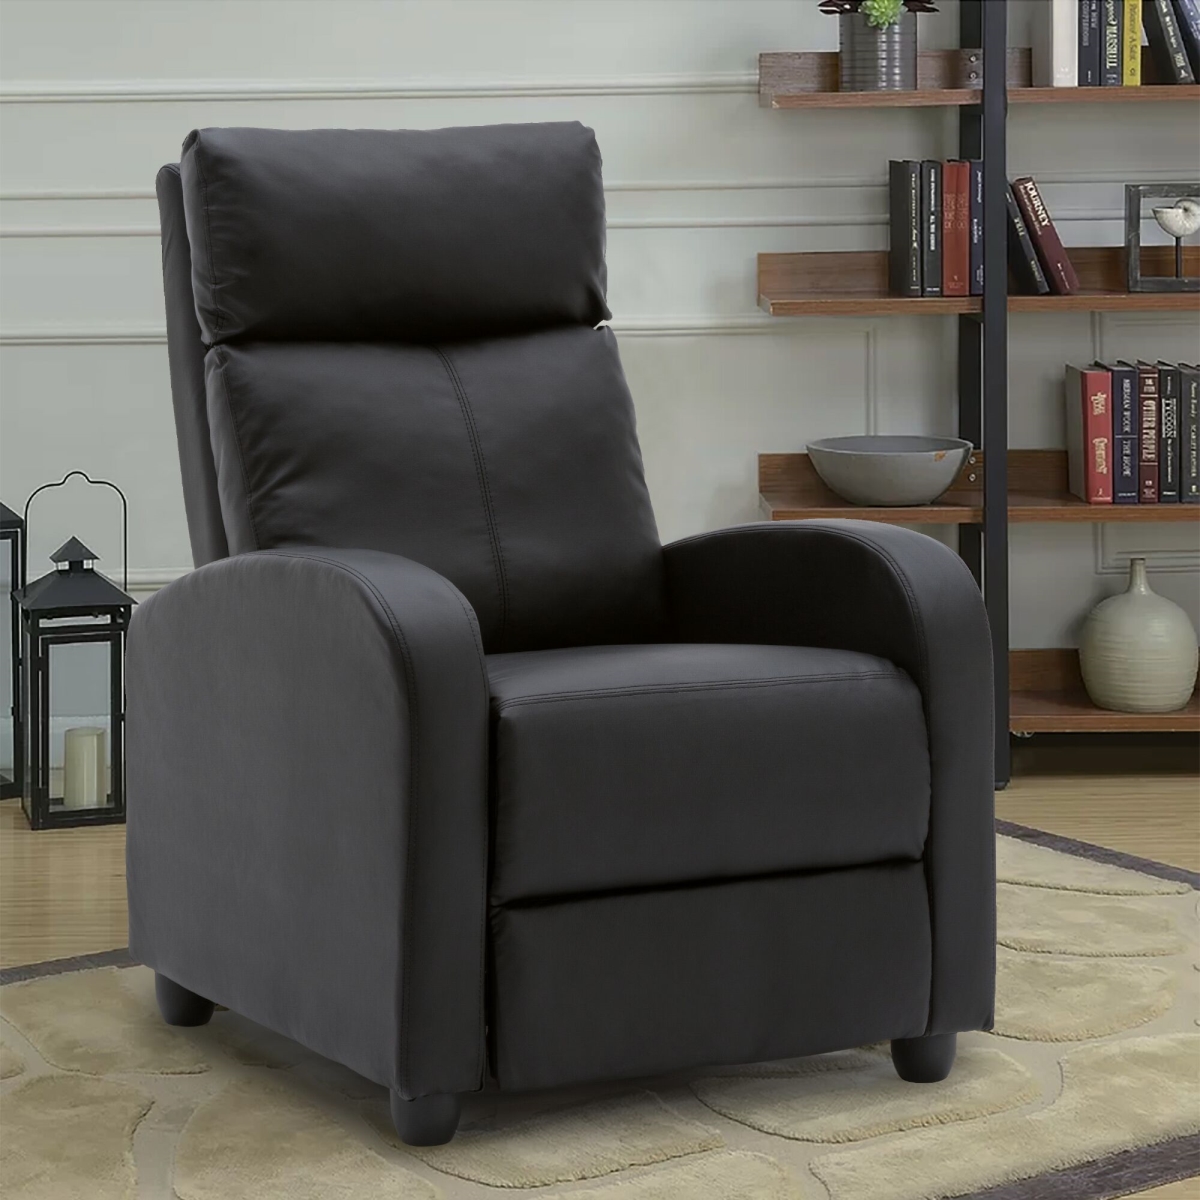 Ow-yt9001b-black Single Black Pu Recliner Sofa Chair, Black